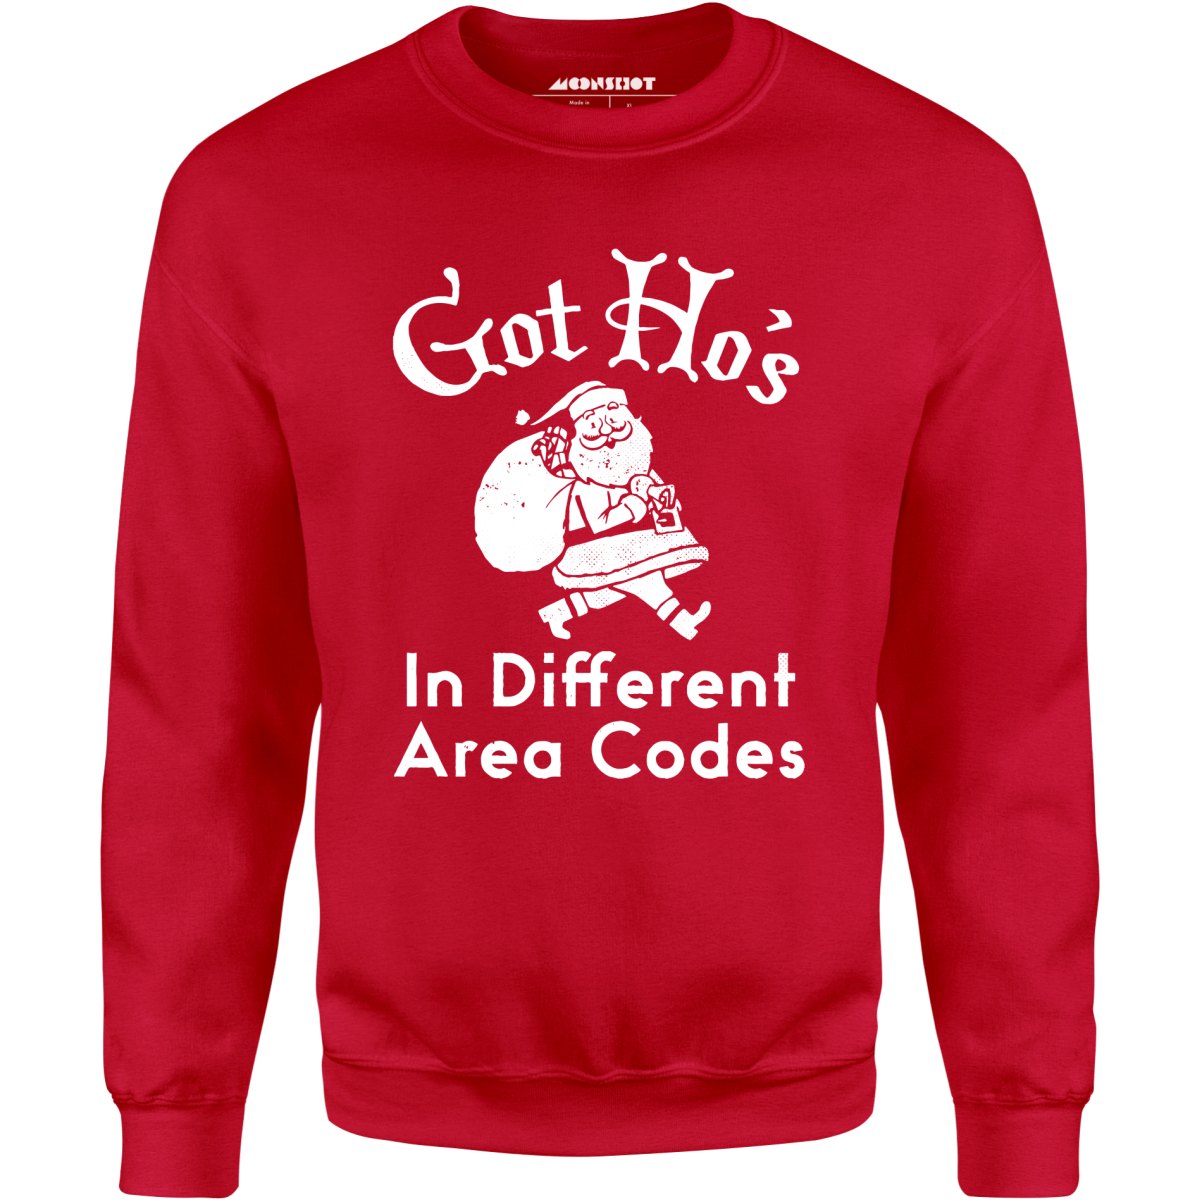 Got Ho's in Different Area Codes - Unisex Sweatshirt